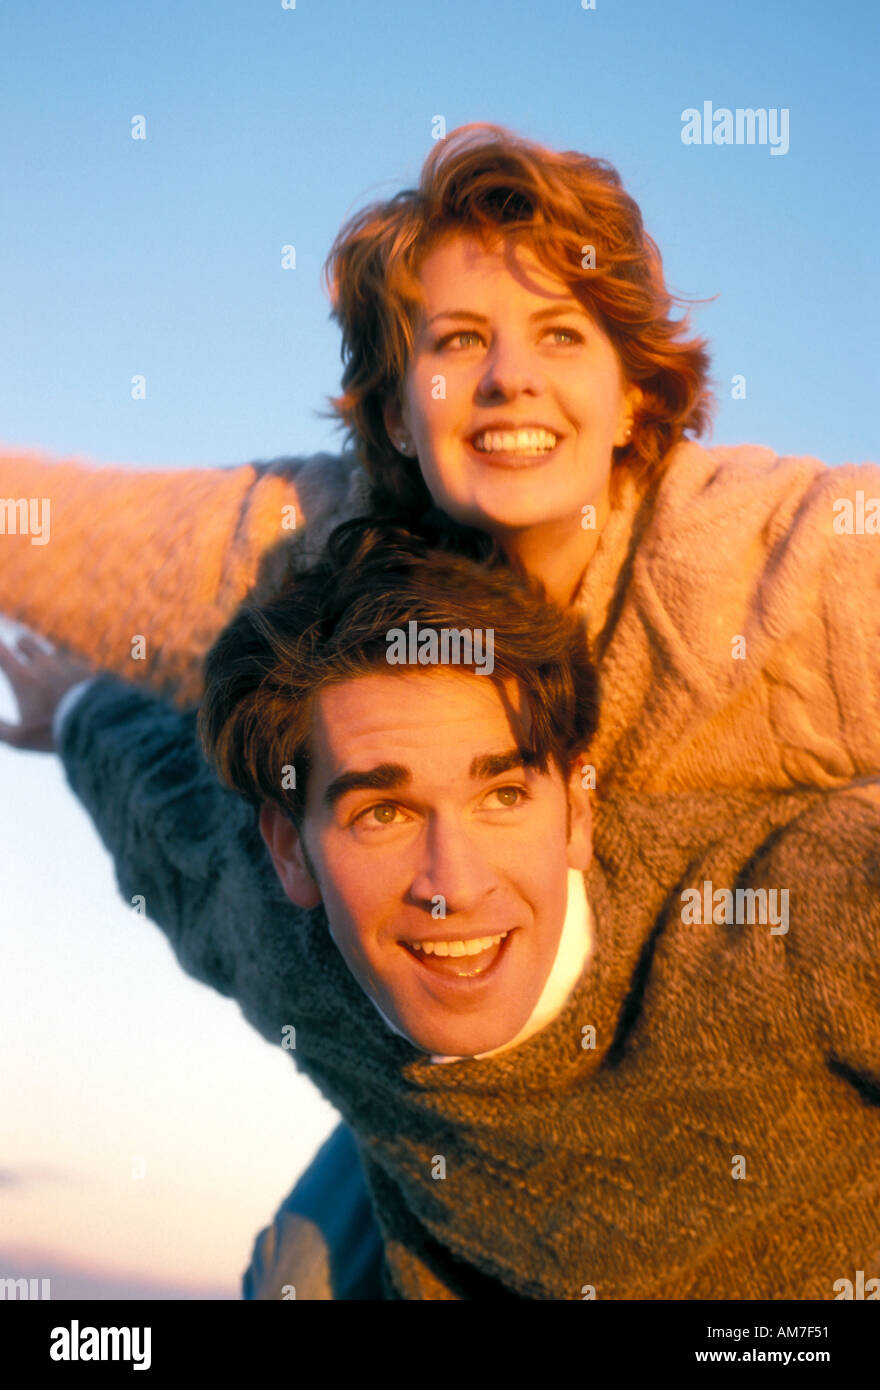 Couple piggyback ride  Stock Photo